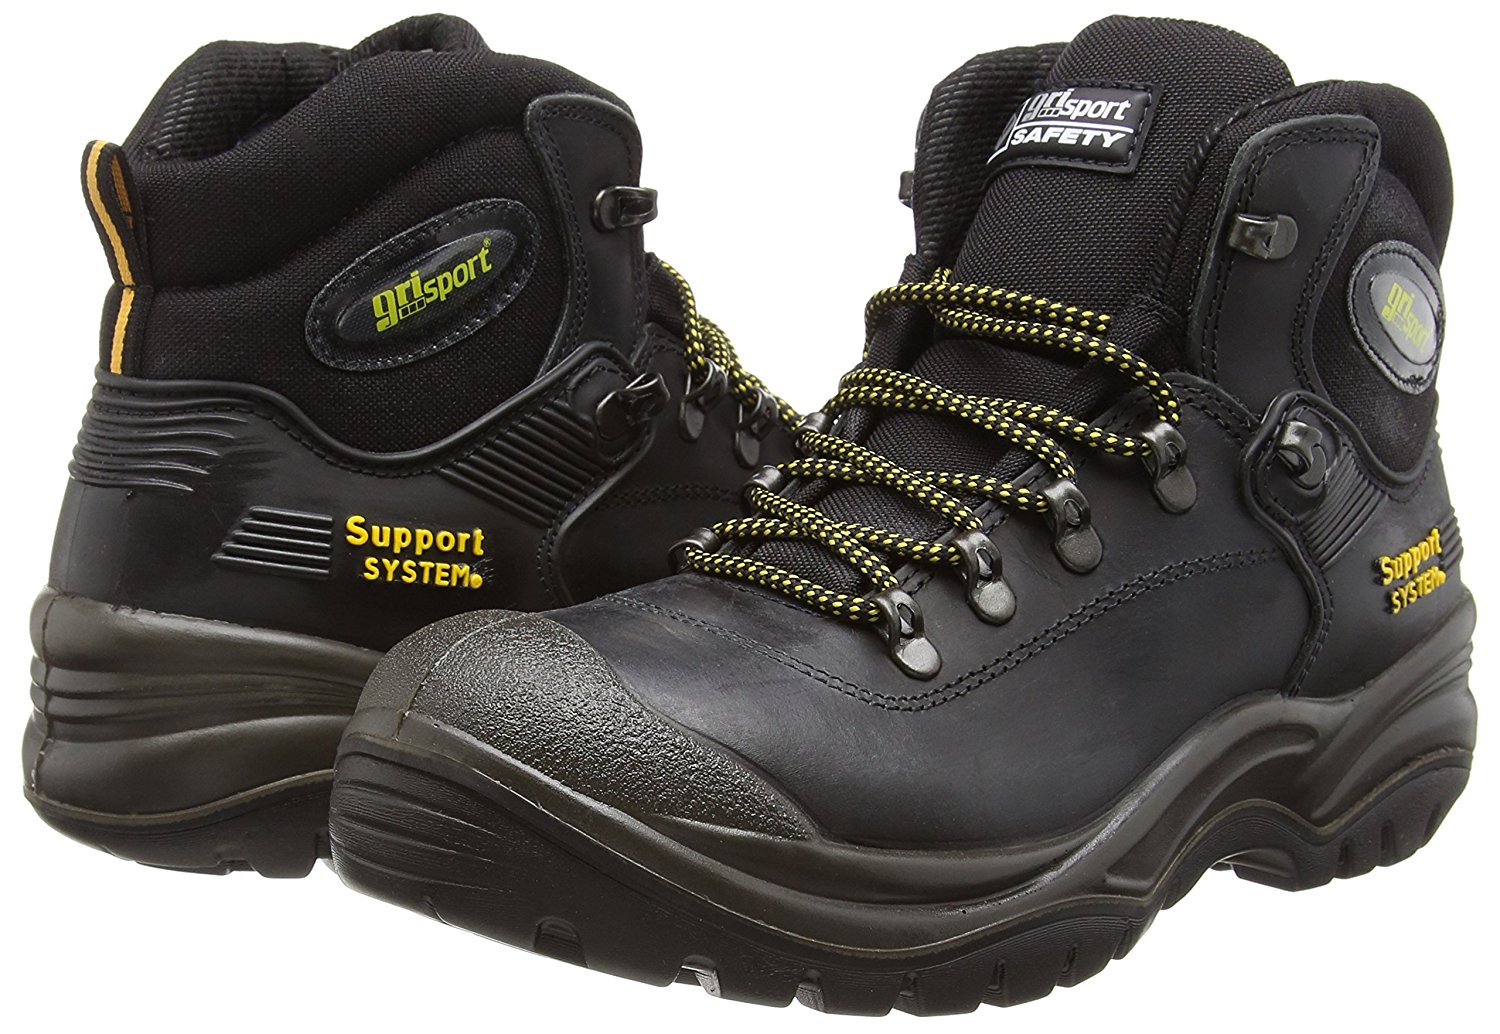 grisport work boots